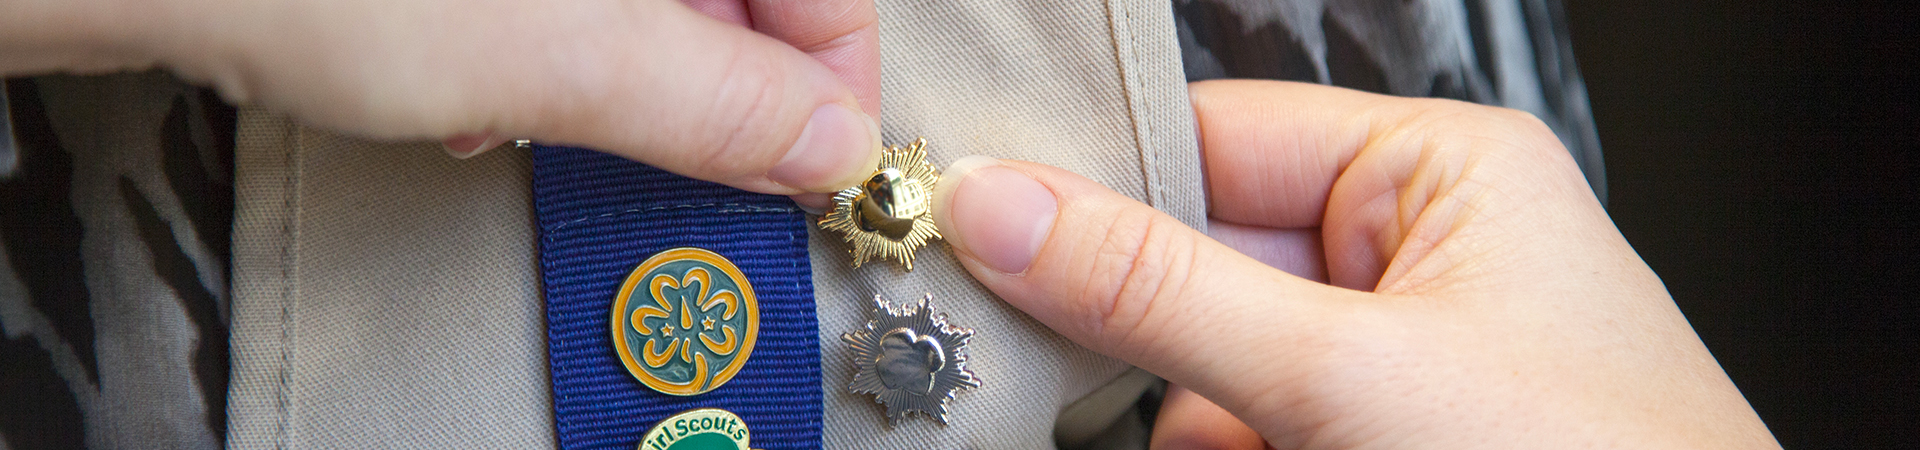  gold award pin on ambassador uniform vest 